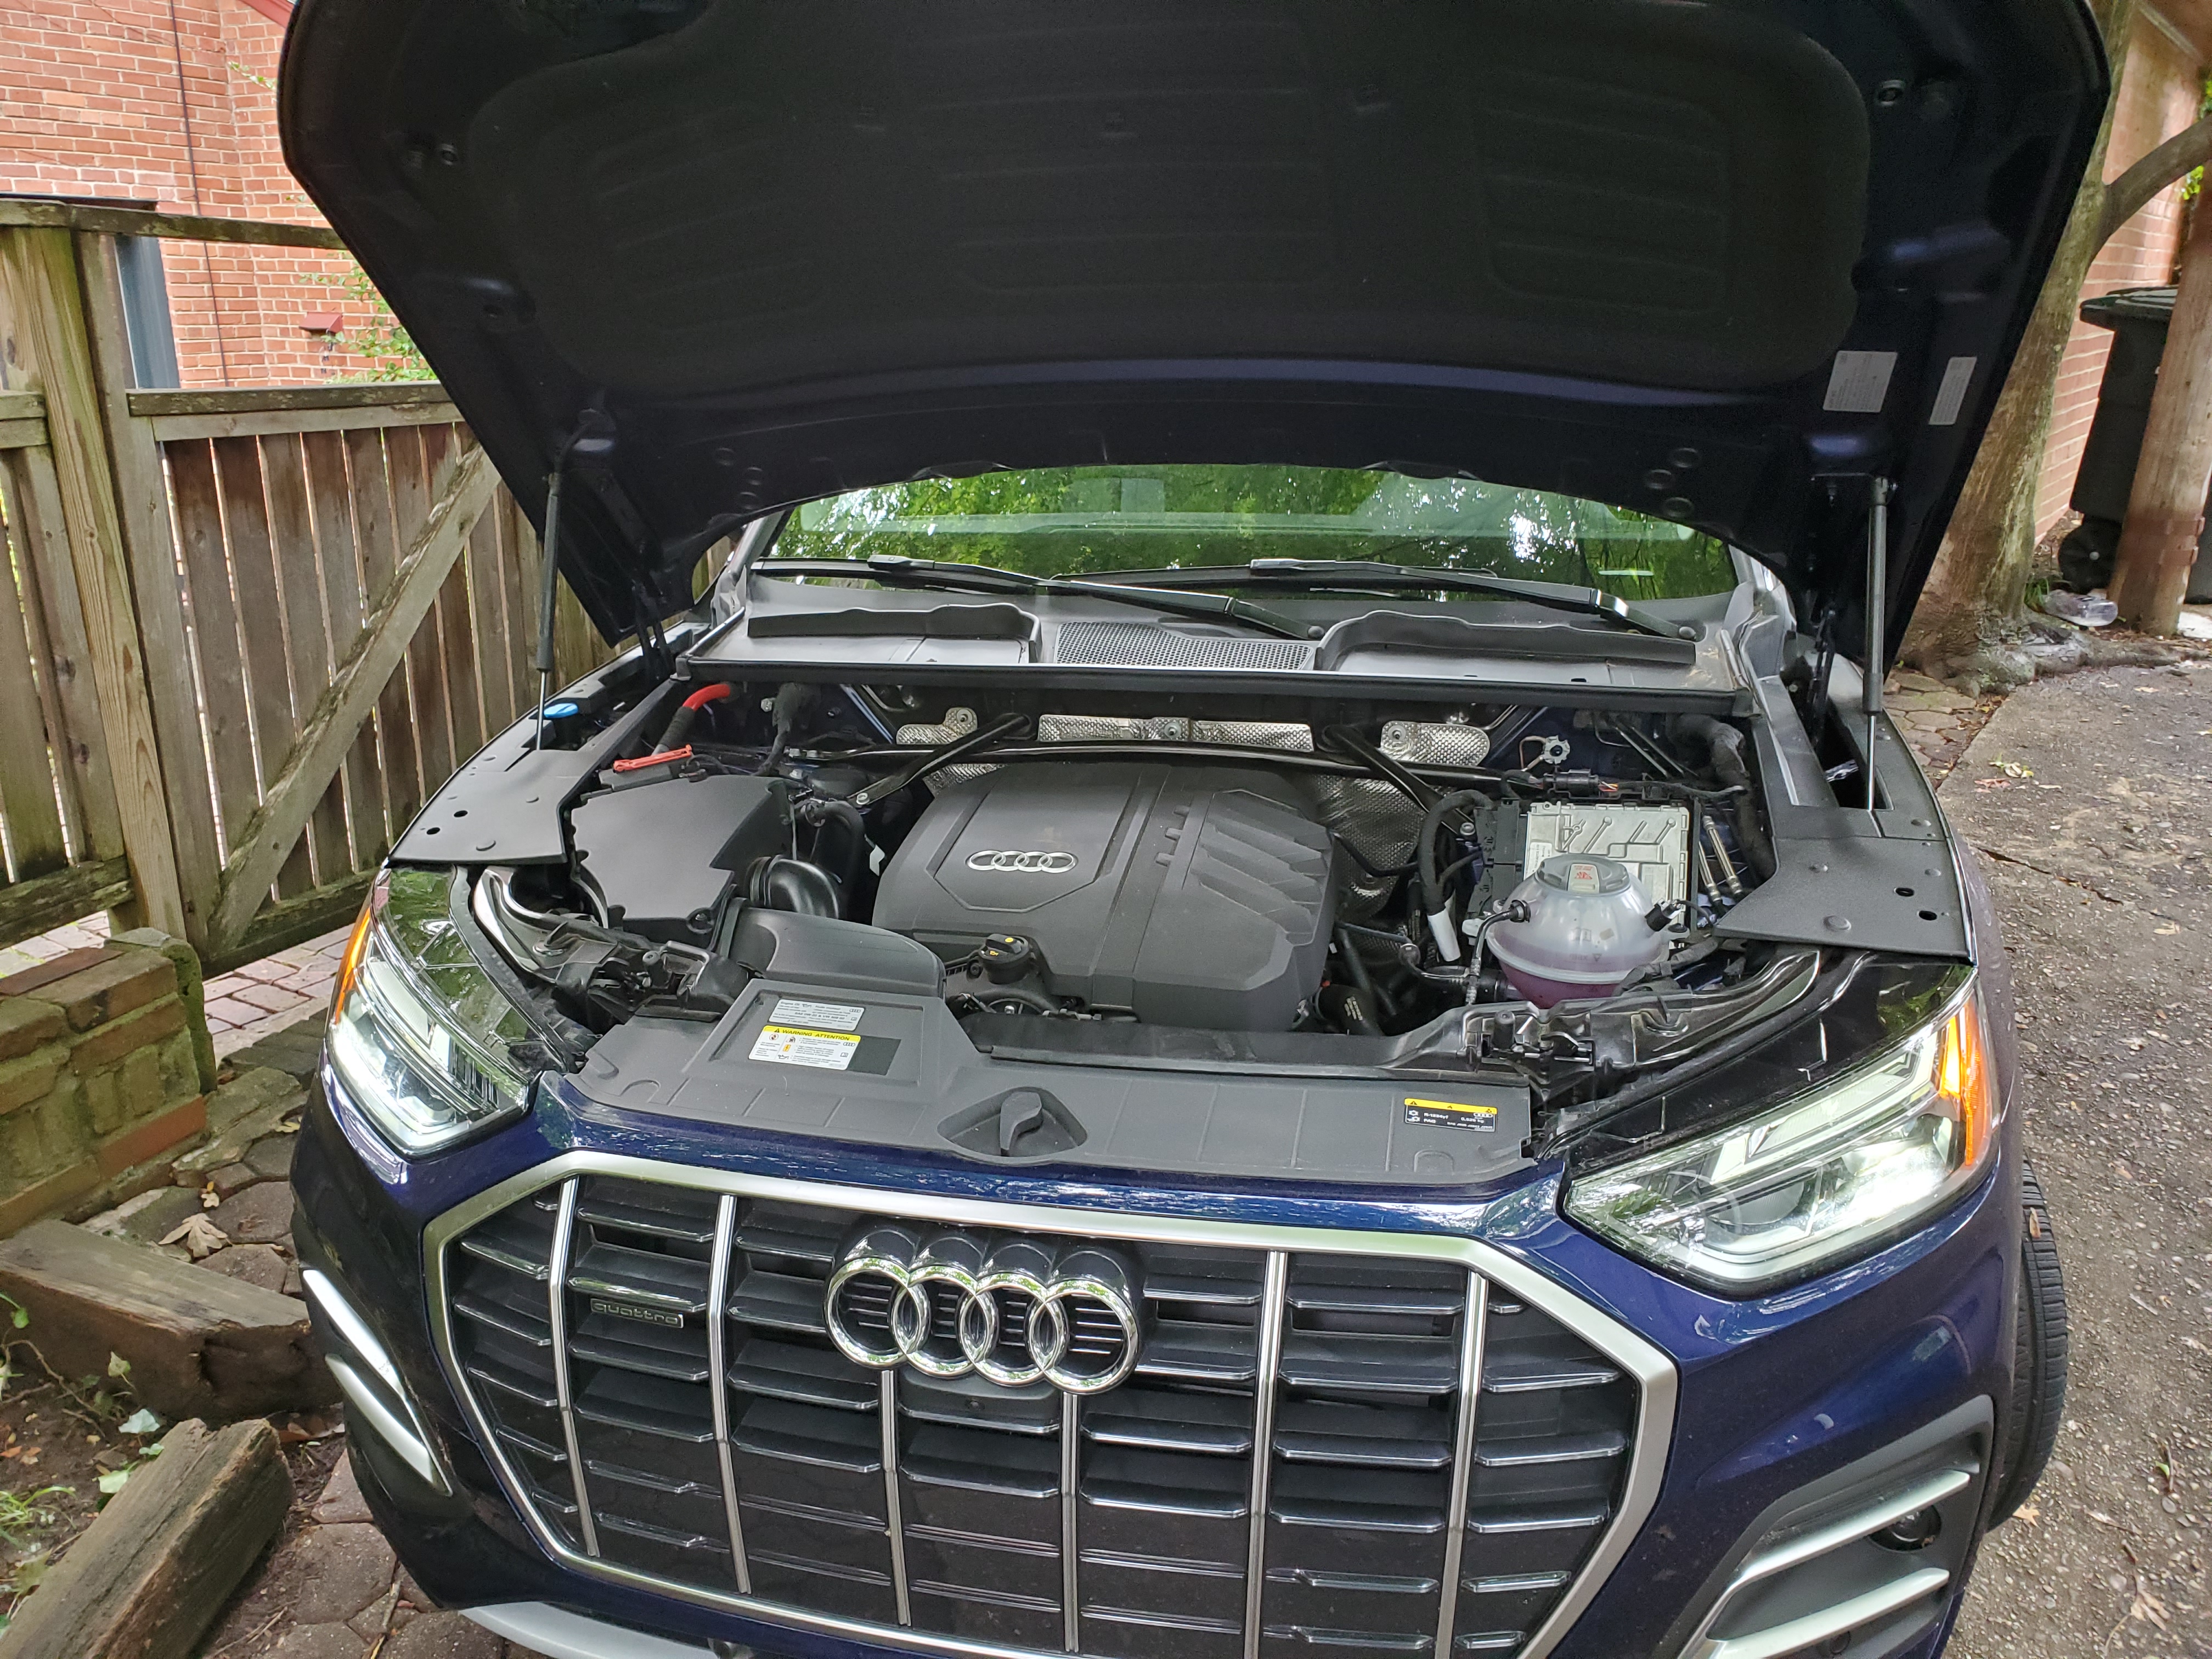 Audi q5 hood open reveling the The 2- liter TSFI engine